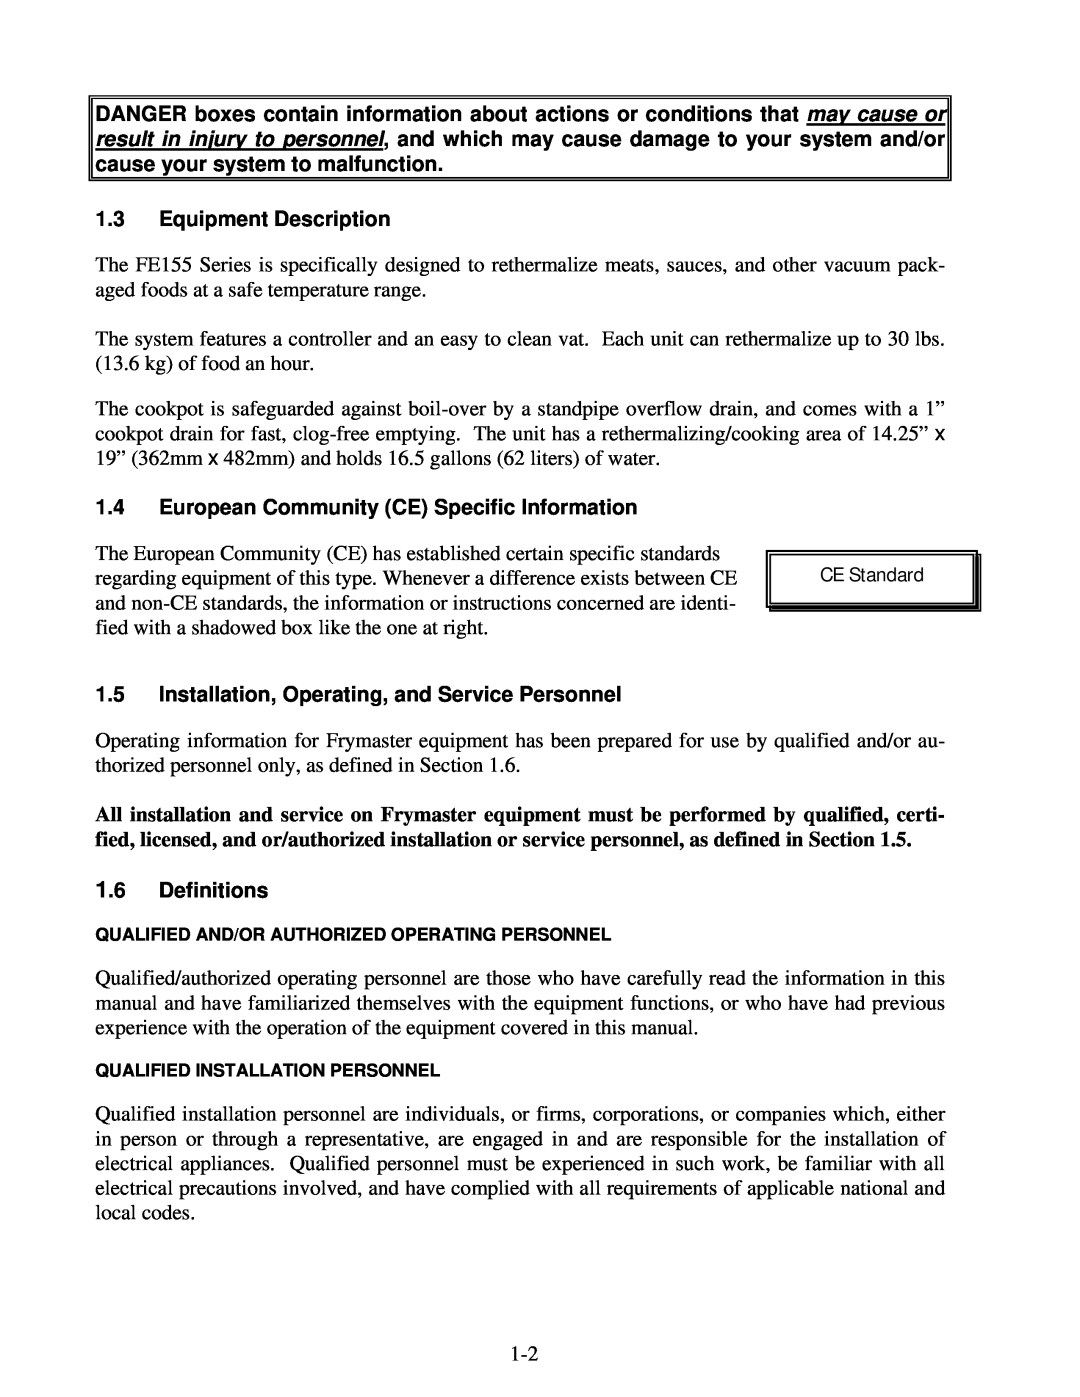 Frymaster FE155 operation manual Equipment Description, European Community CE Specific Information, Definitions 